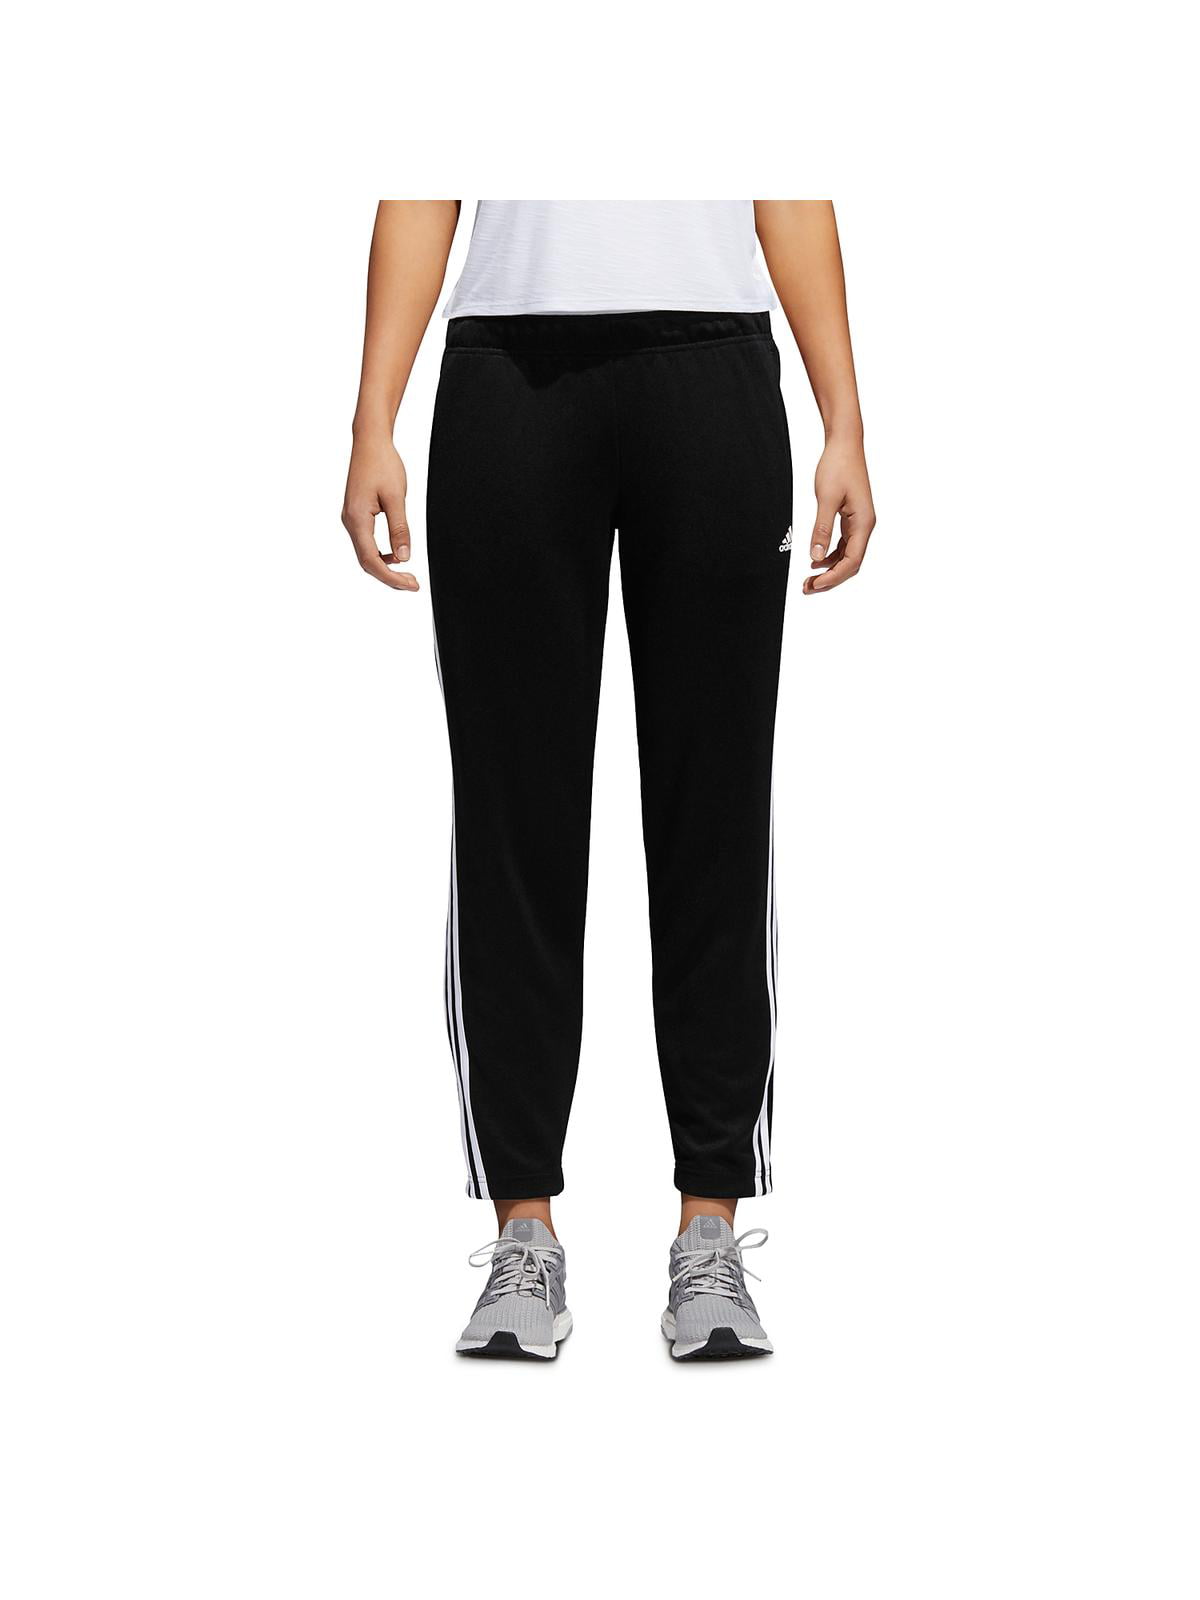 Adidas Womens Tricot Snap Fitness Track Black S Walmart.com